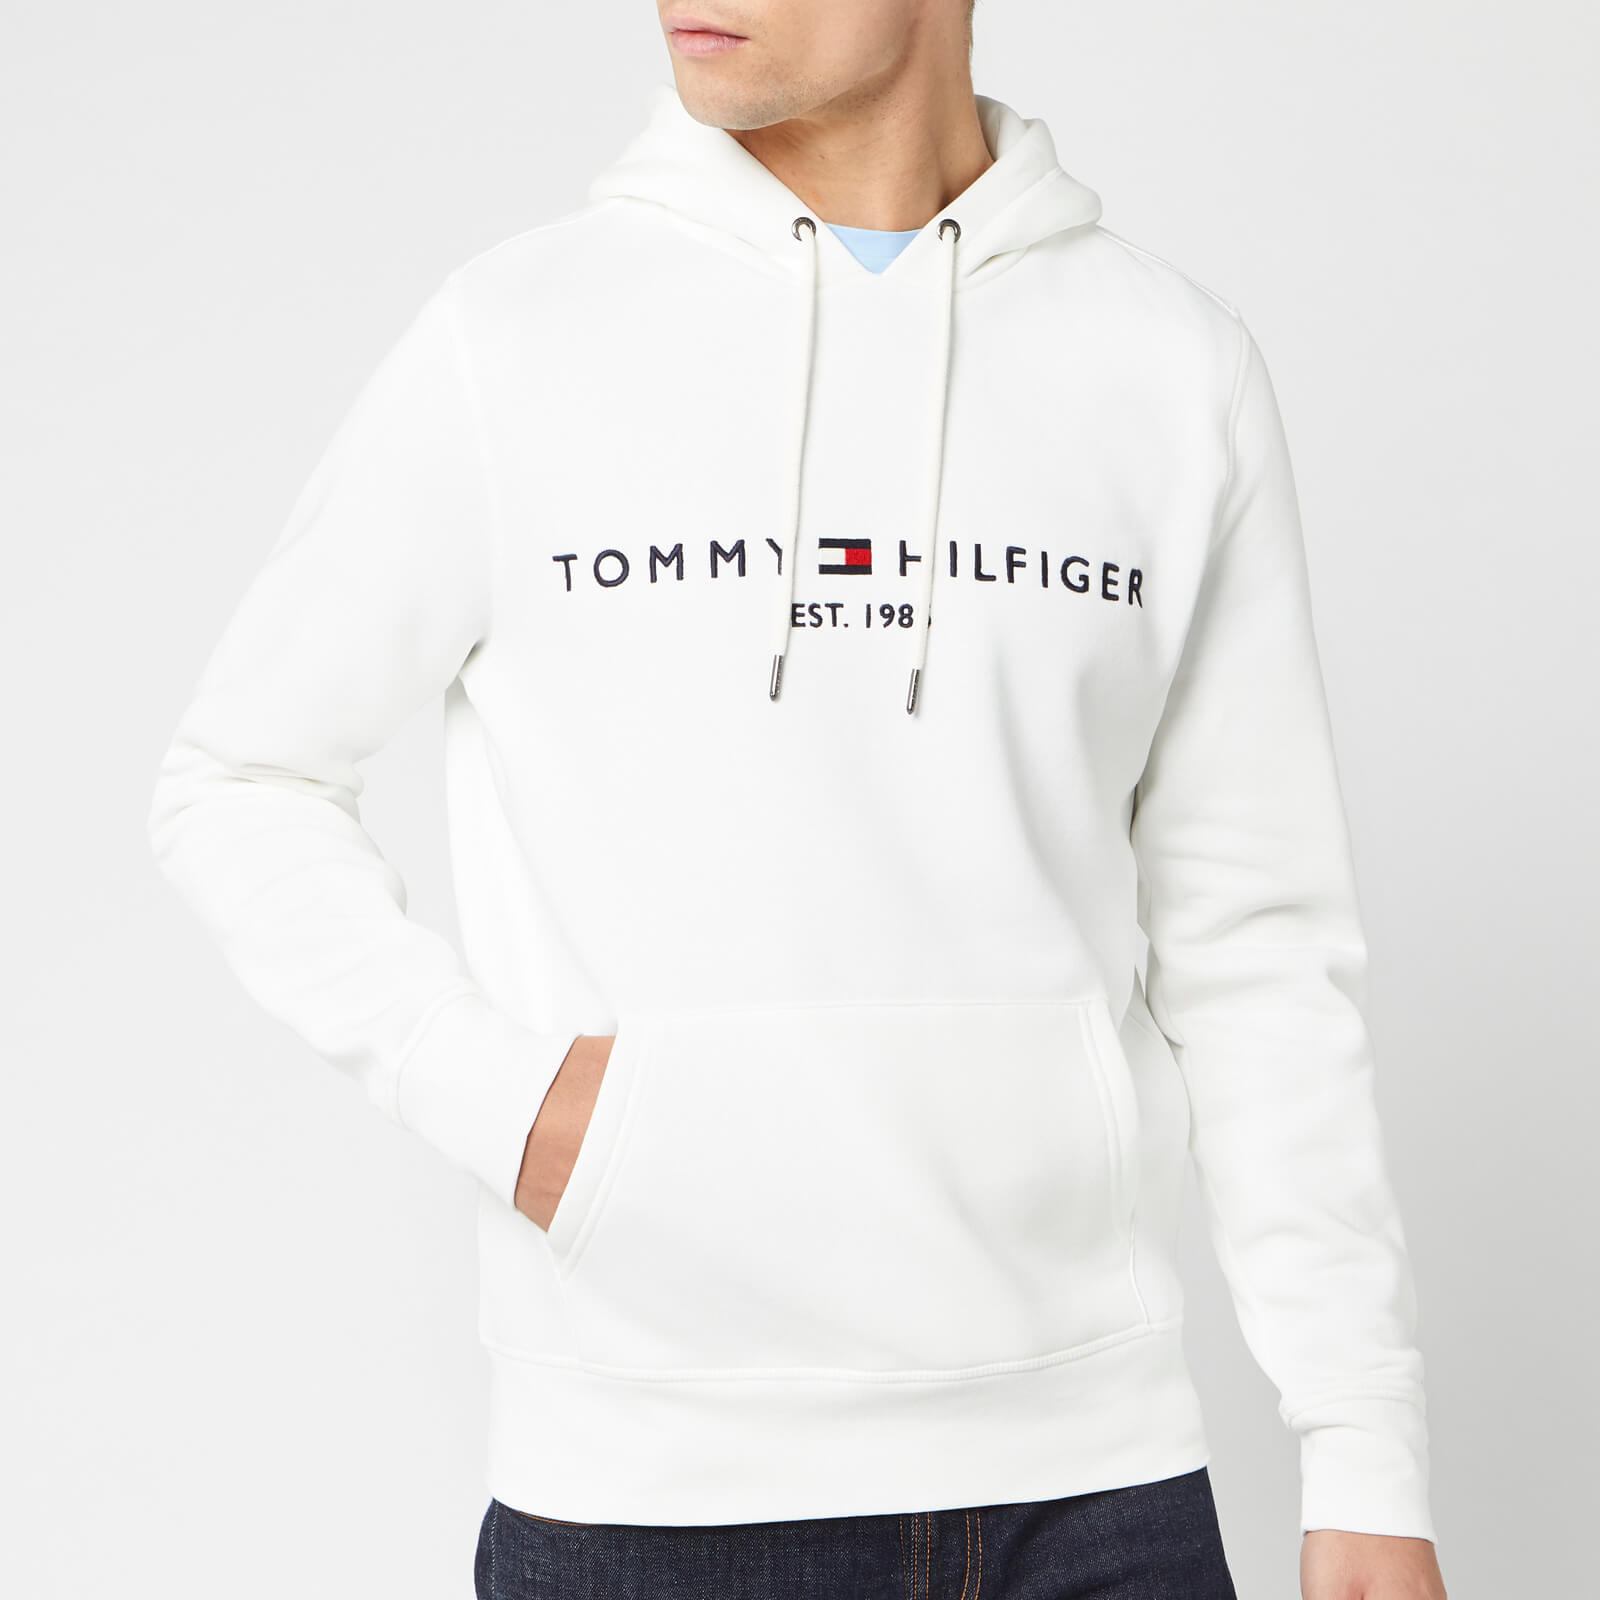 tommy hilfiger sweatshirt sale